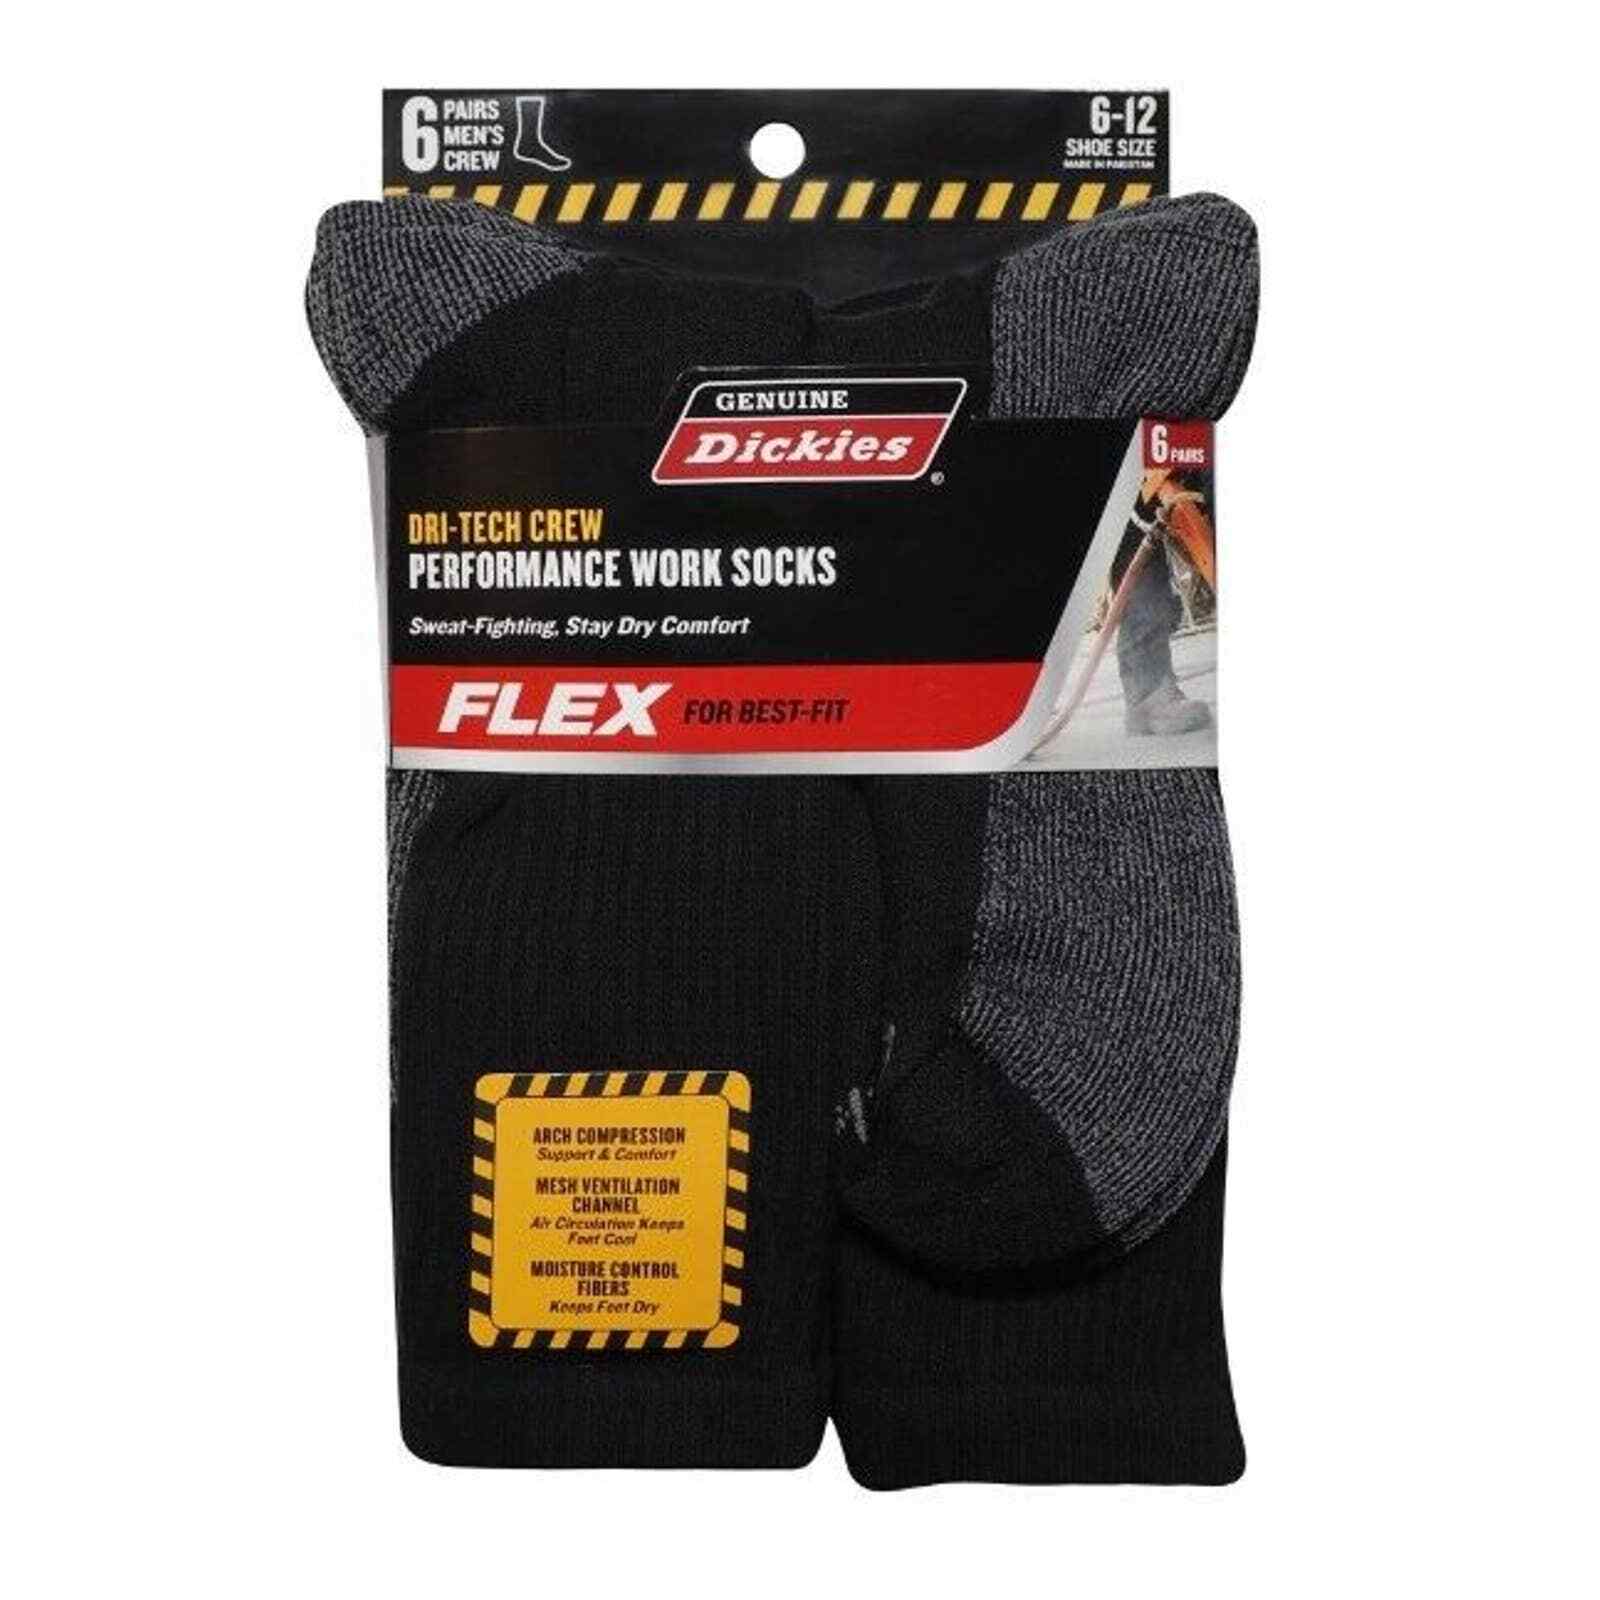 Dickies Performance Mens Work Socks Black Dri-Tech Crew 6 Pack Size 6-12 - $21.23